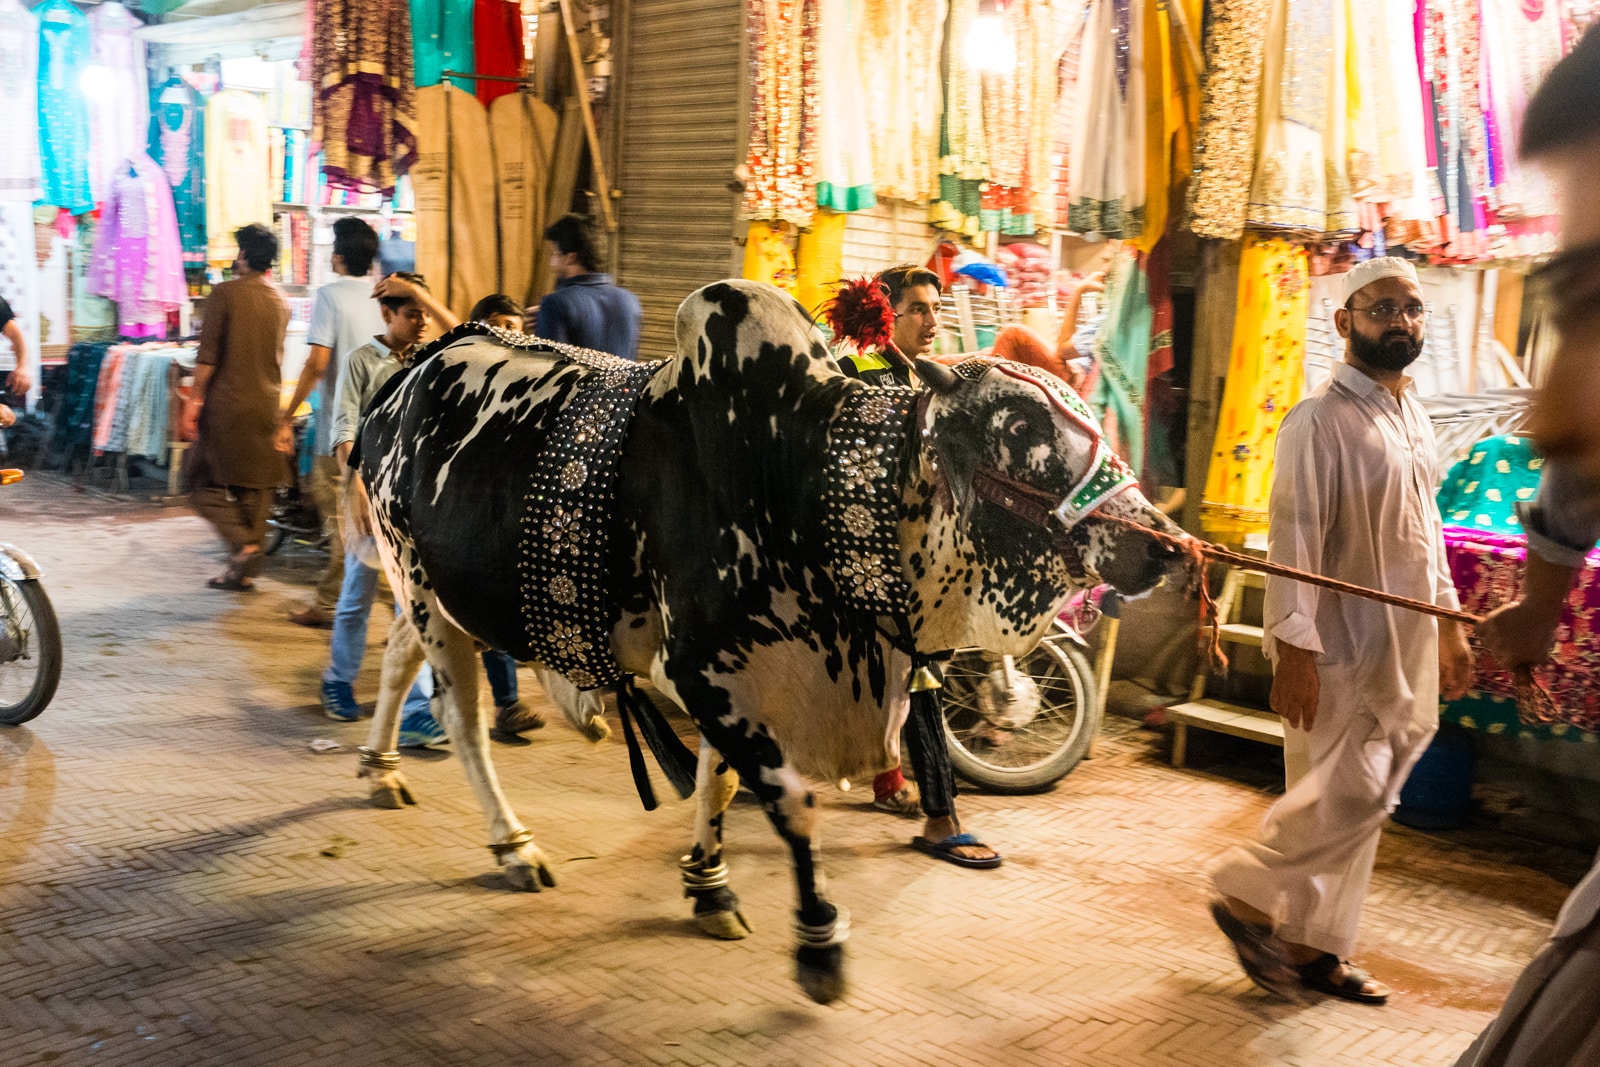 Celebrating Eid al-Adha in Lahore, Pakistan - Cow walking through the Wazir Khan bazaar - Lost With Purpose travel blog